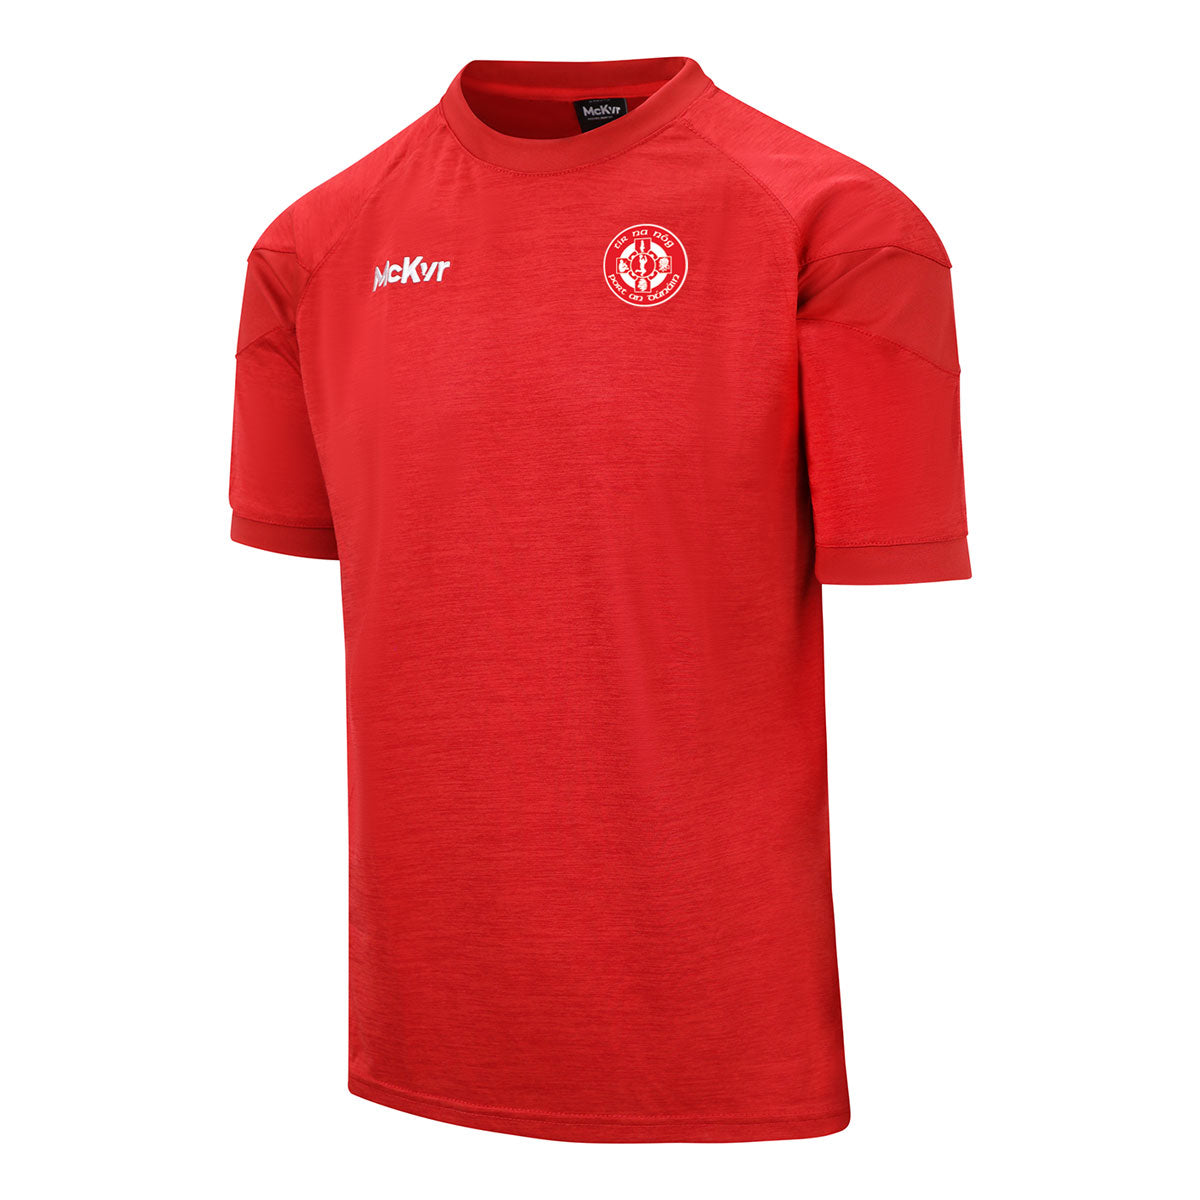 Mc Keever Tir na nOg GAA Core 22 T-Shirt - Adult - Red